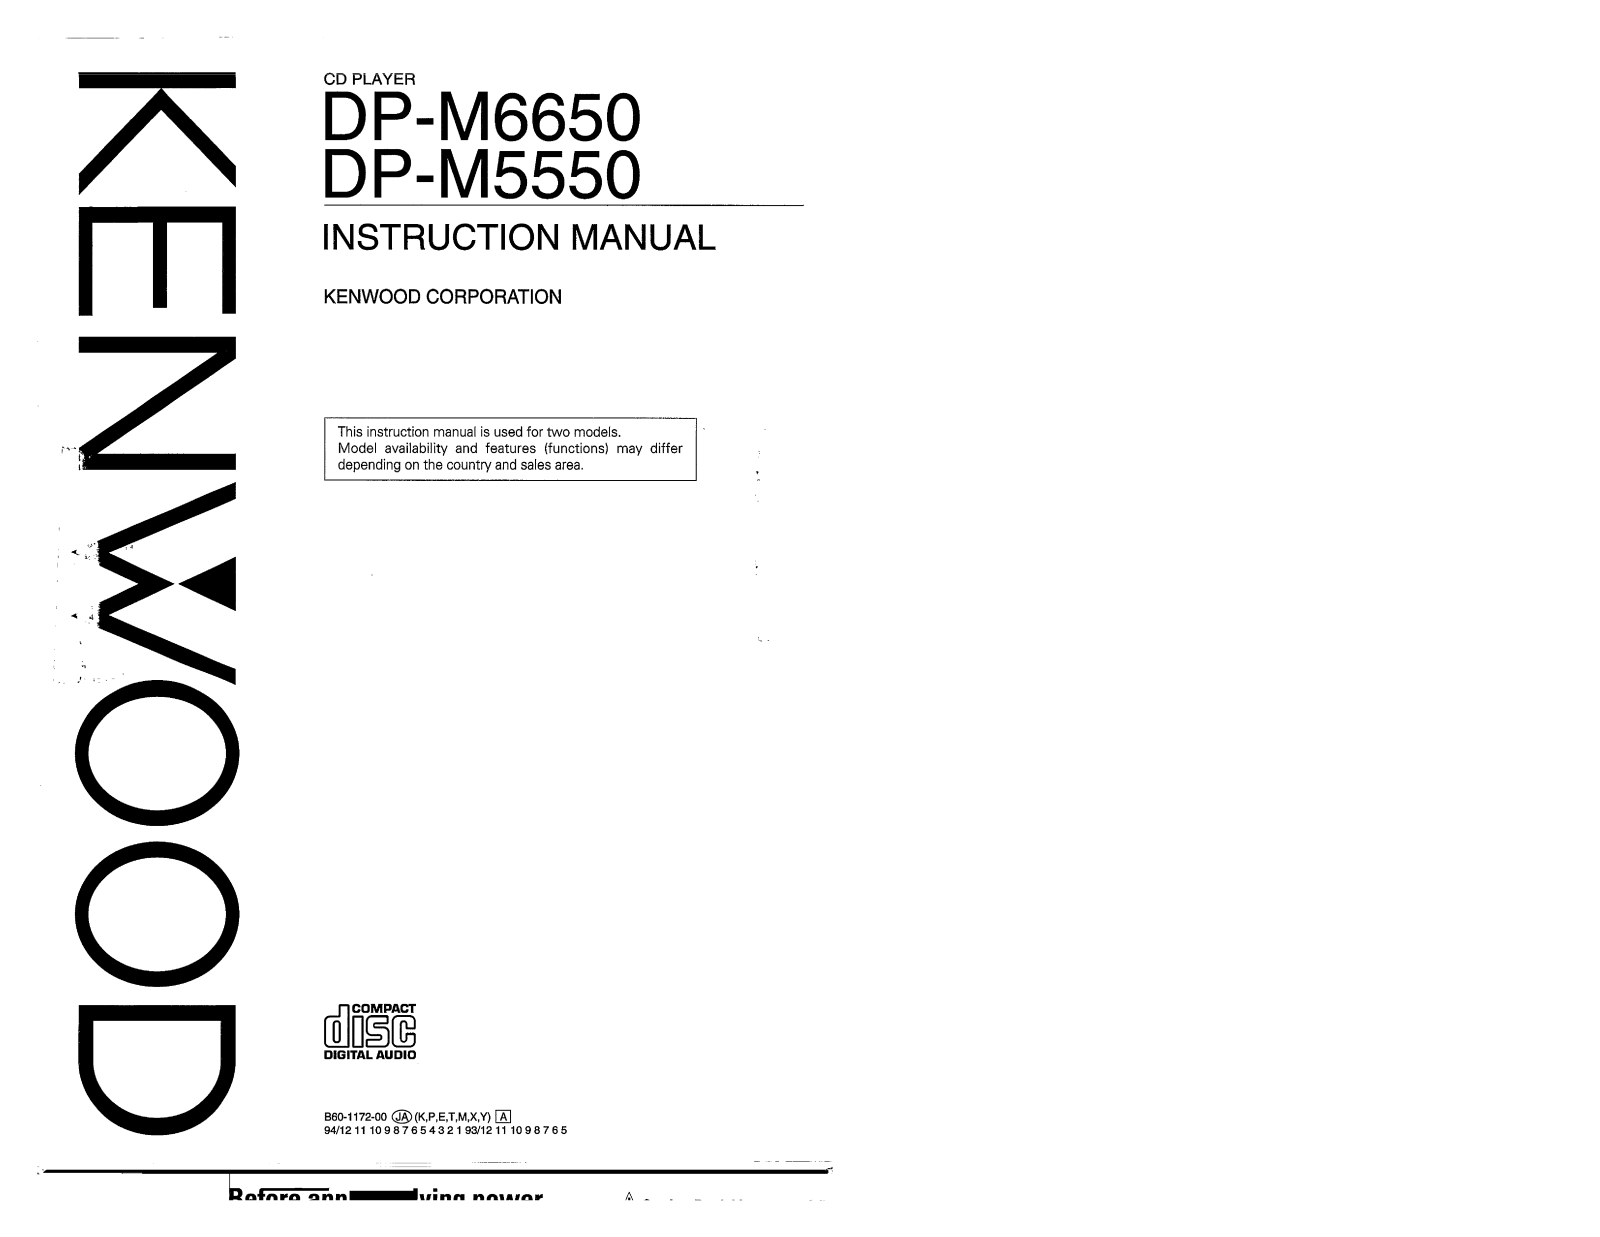 Kenwood DP-M5550, DP-M6650 User Manual